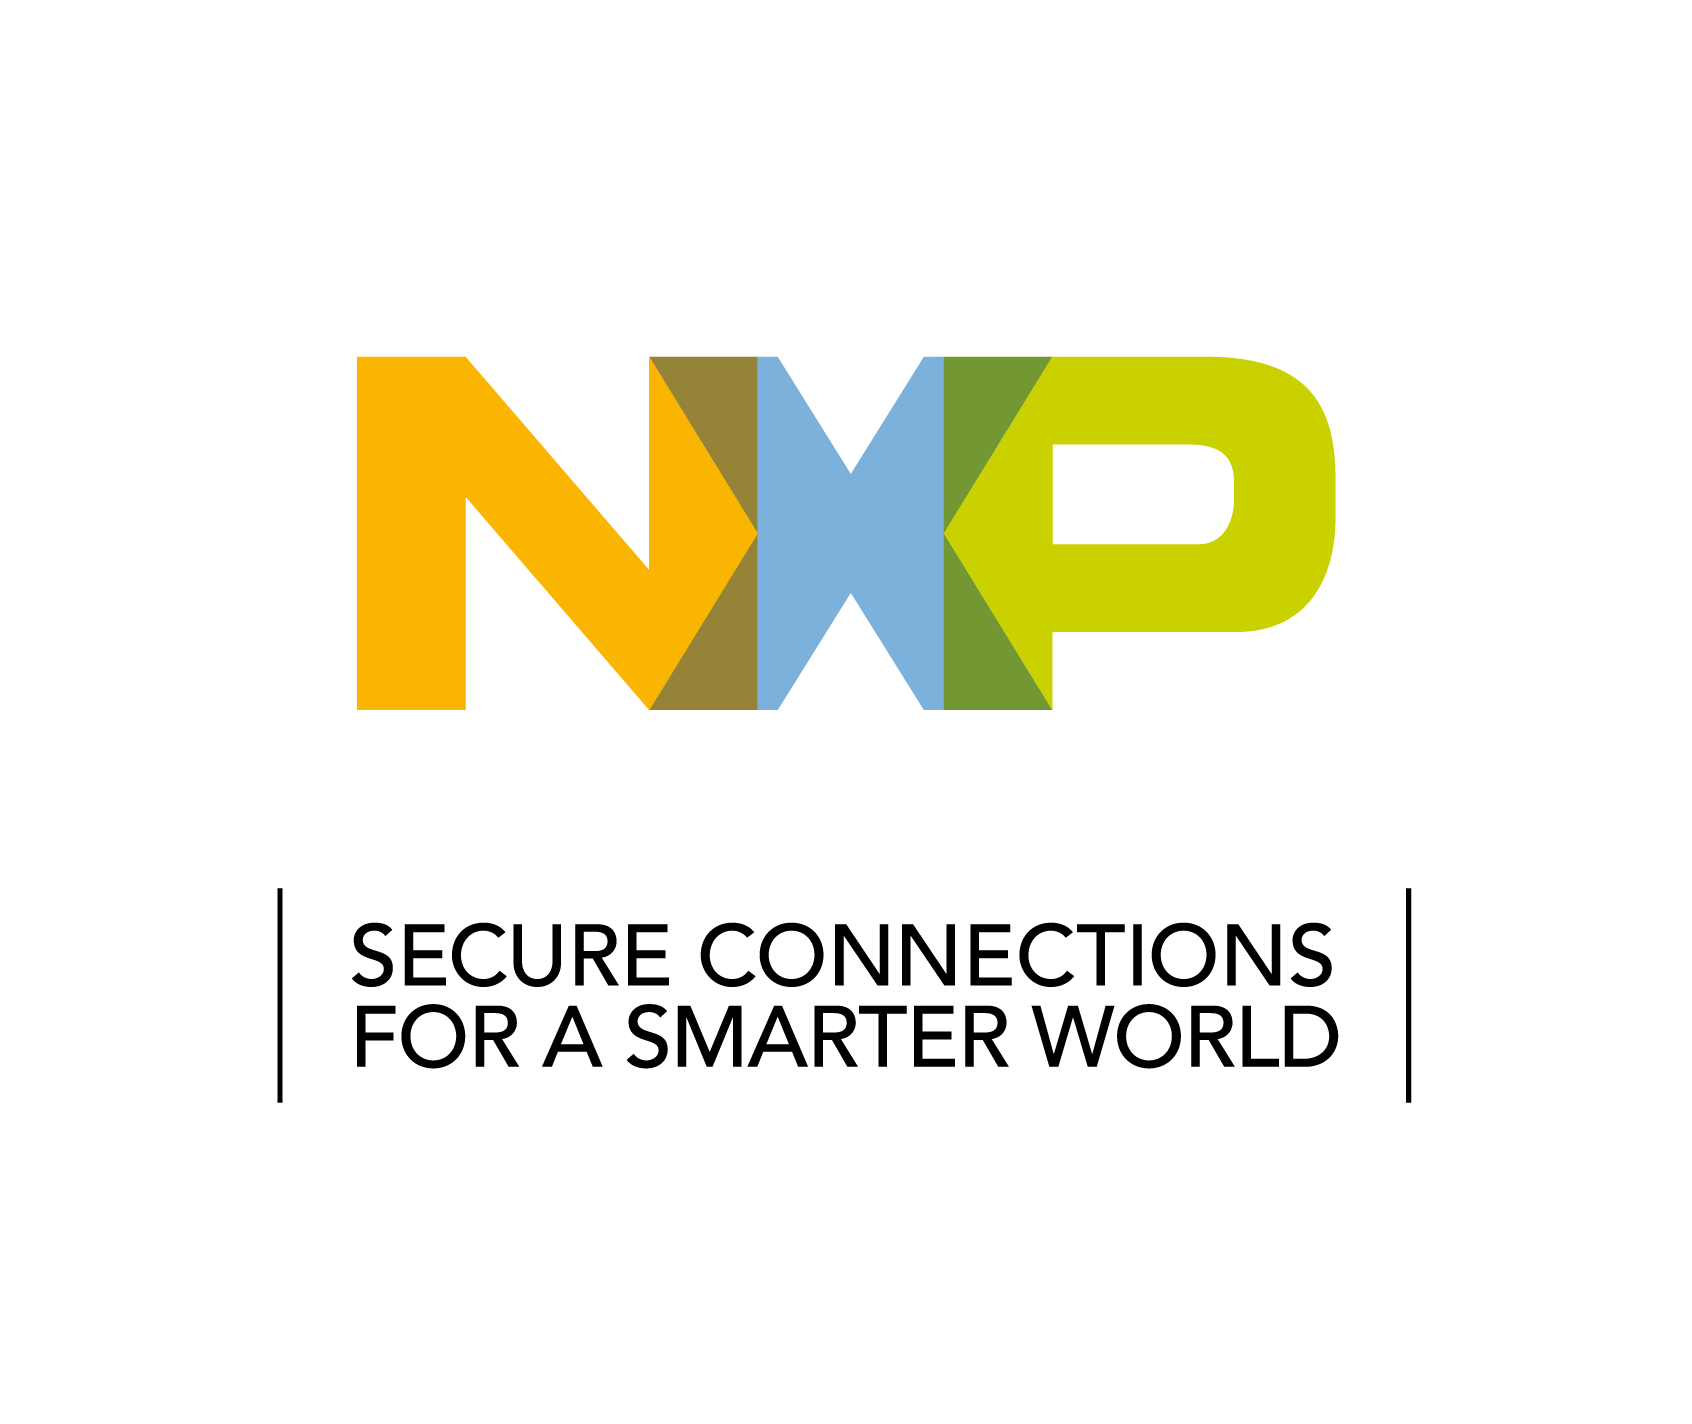 NXP Logo - The DSI Consortium